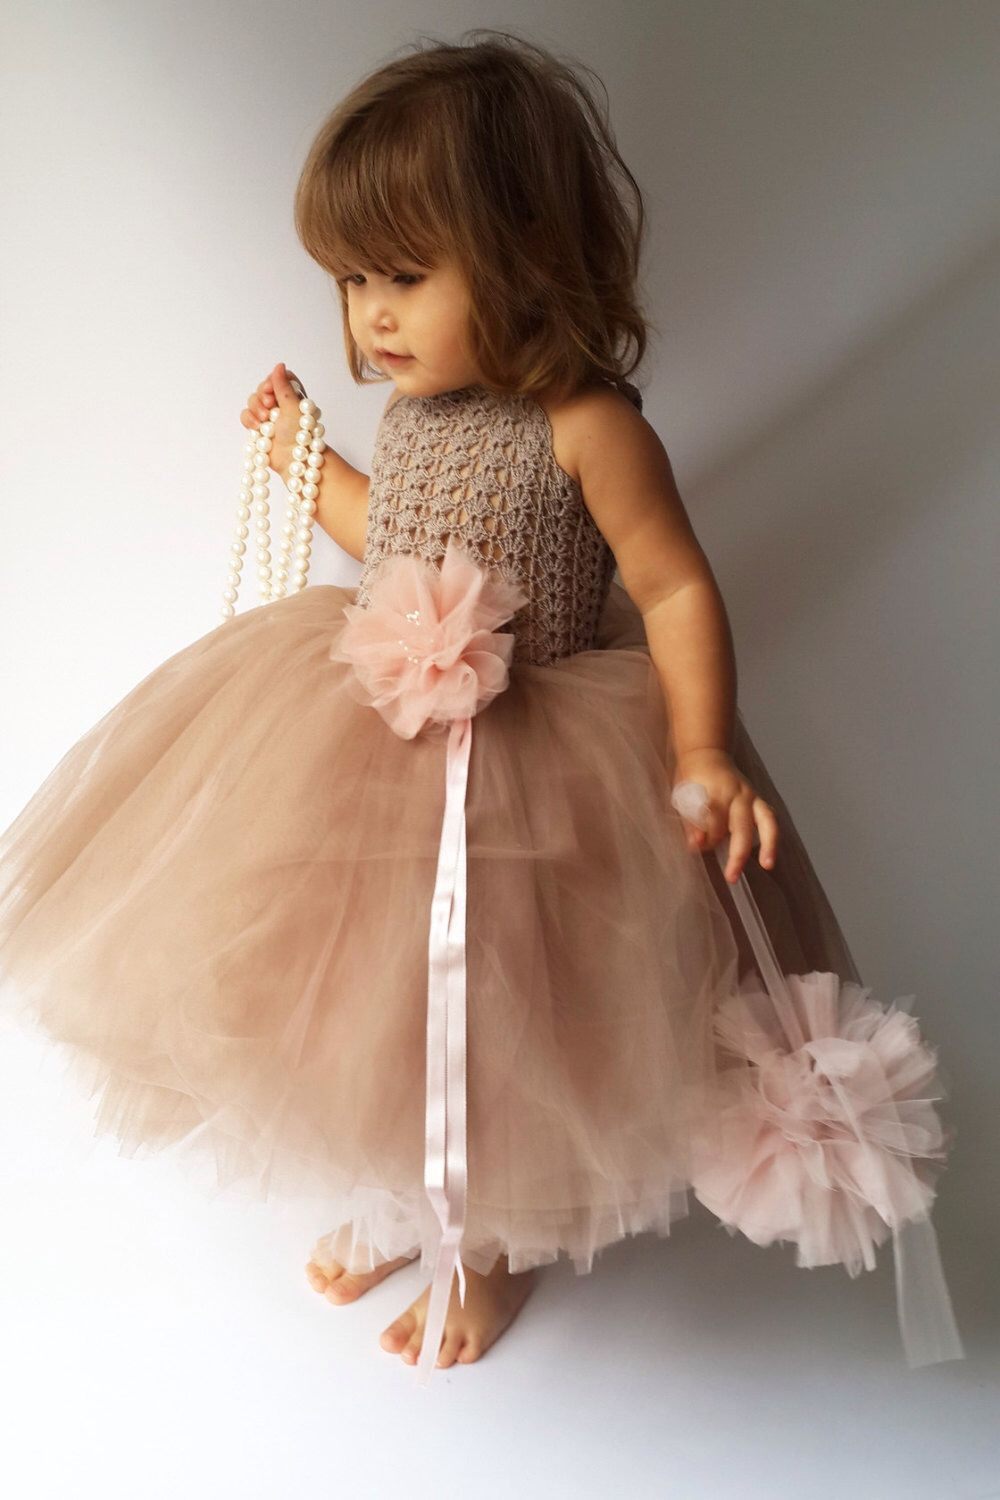 DIY Tutu Dress For Toddler
 Ankle Length Double Layered Puffy Tutu Dress Any custom